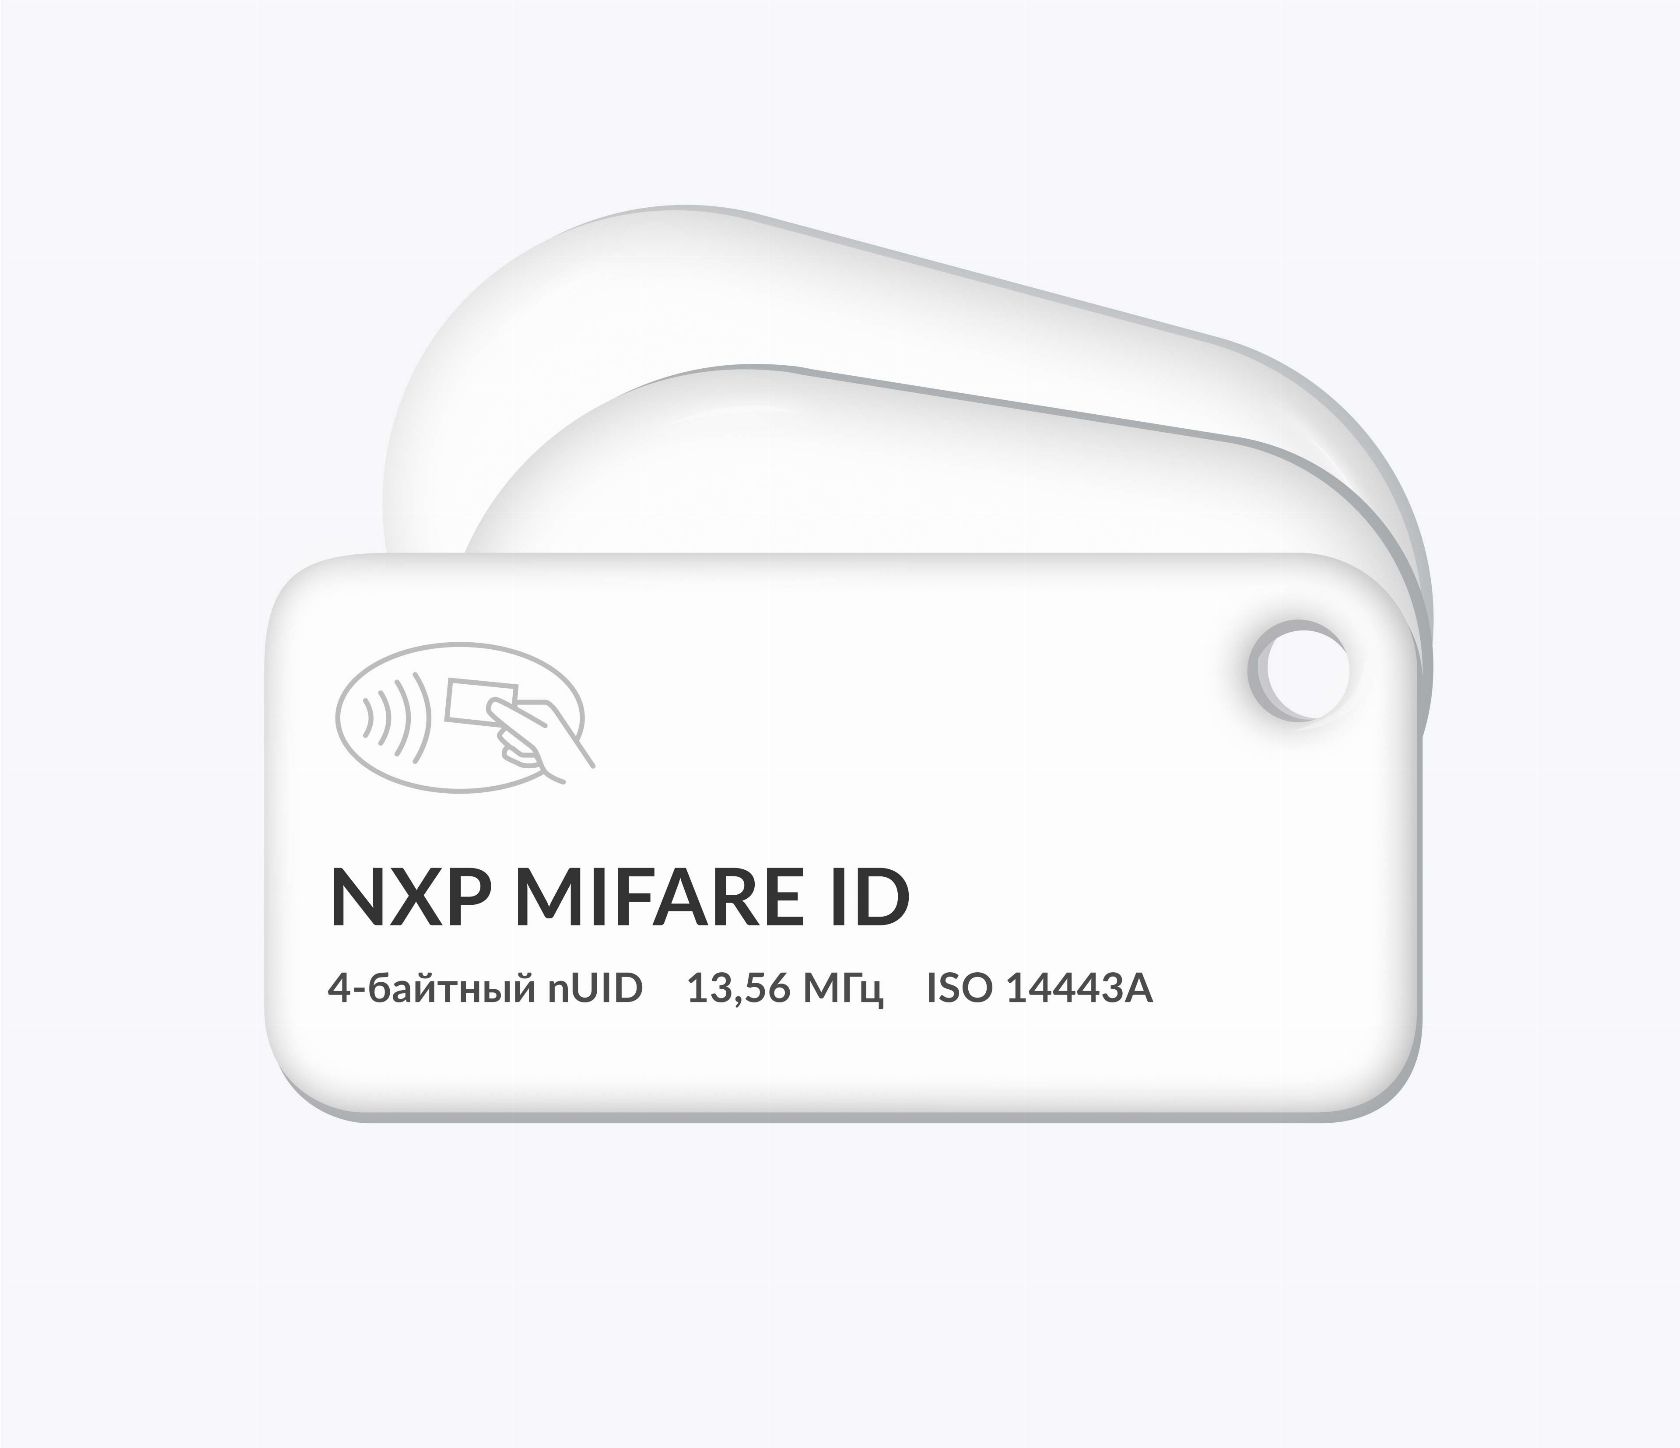 RFID-брелоки NEOKEY® с чипом NXP MIFARE ID 4 byte nUID и вашим логотипом RFID-брелоки NEOKEY® с чипом NXP MIFARE ID 4 byte nUID и вашим логотипом